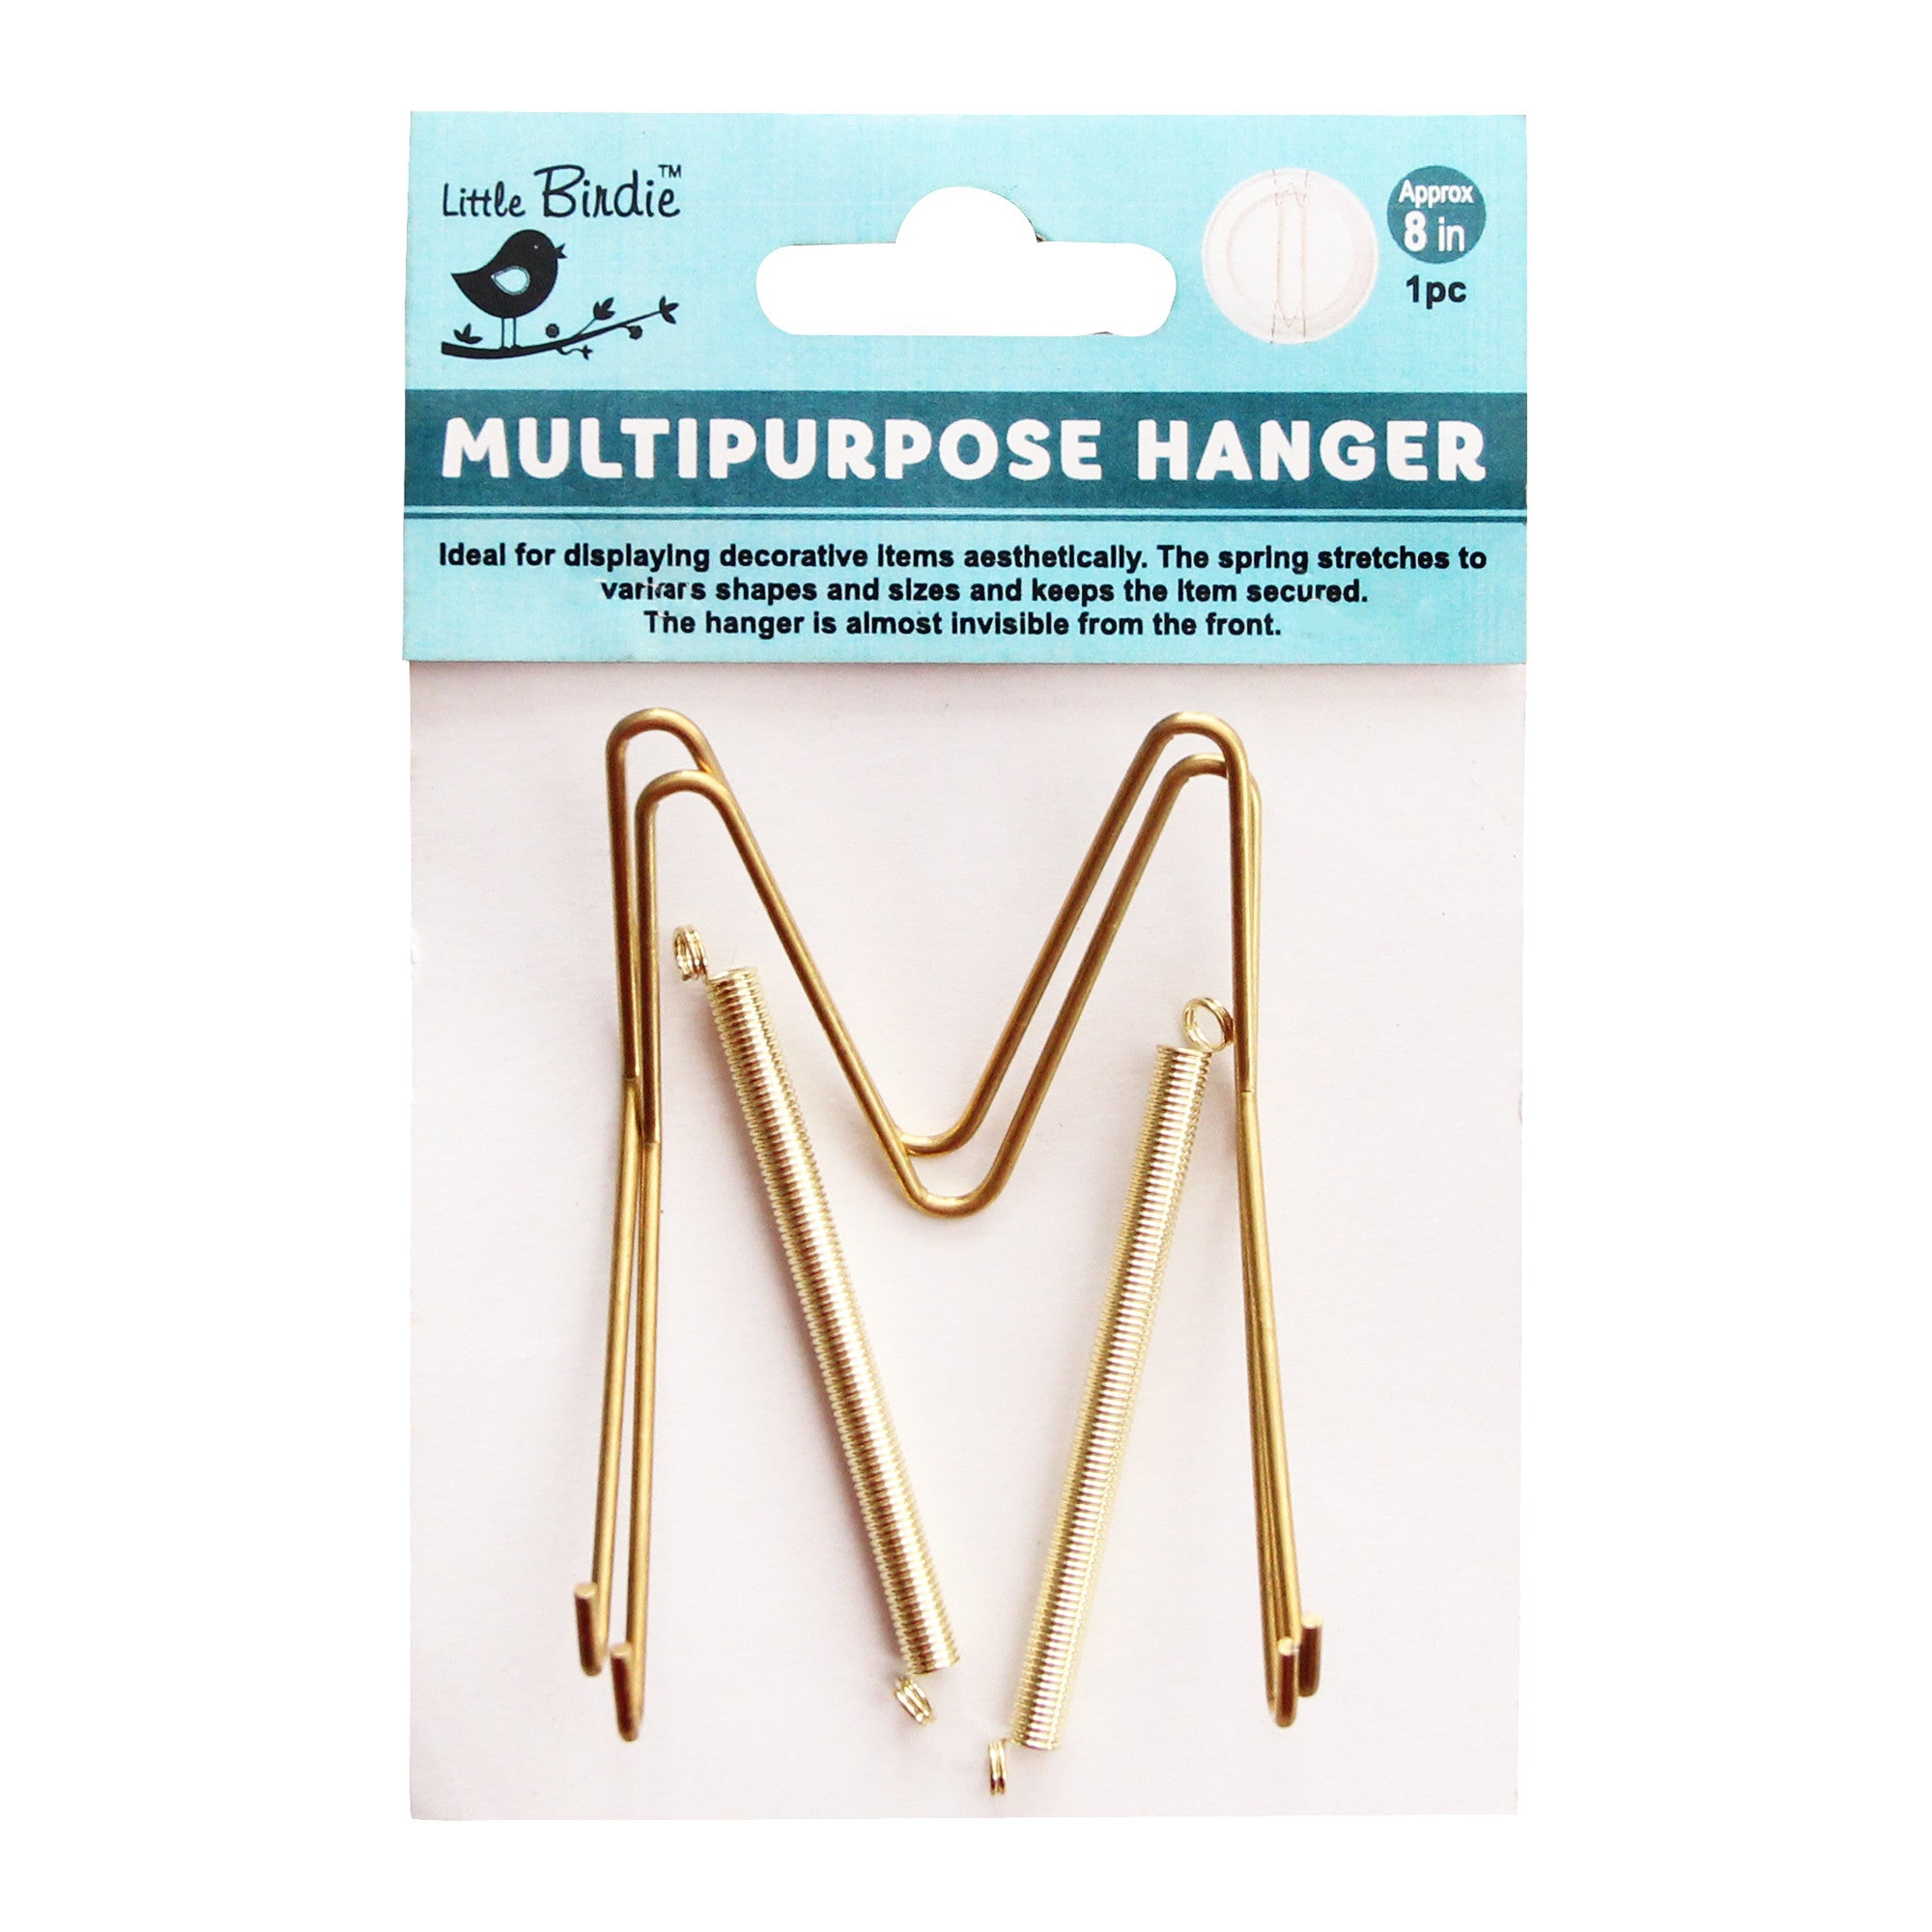 Multipurpose Hanger- 8inch, 1pc